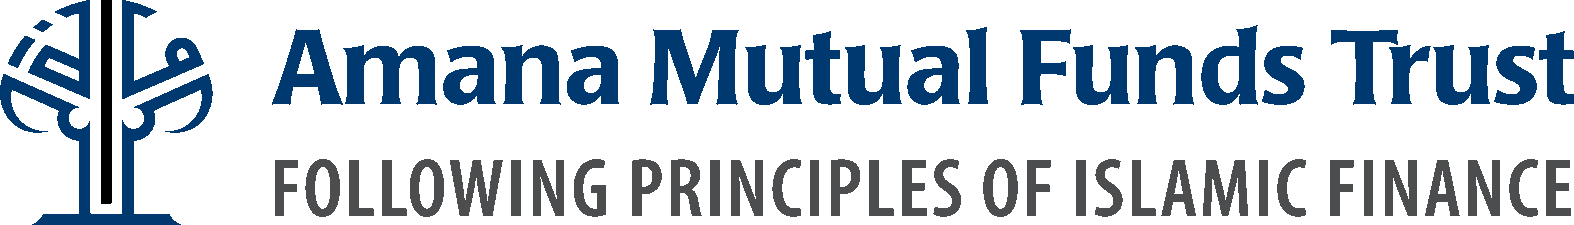 Amana Mutual Funds Trust Logo